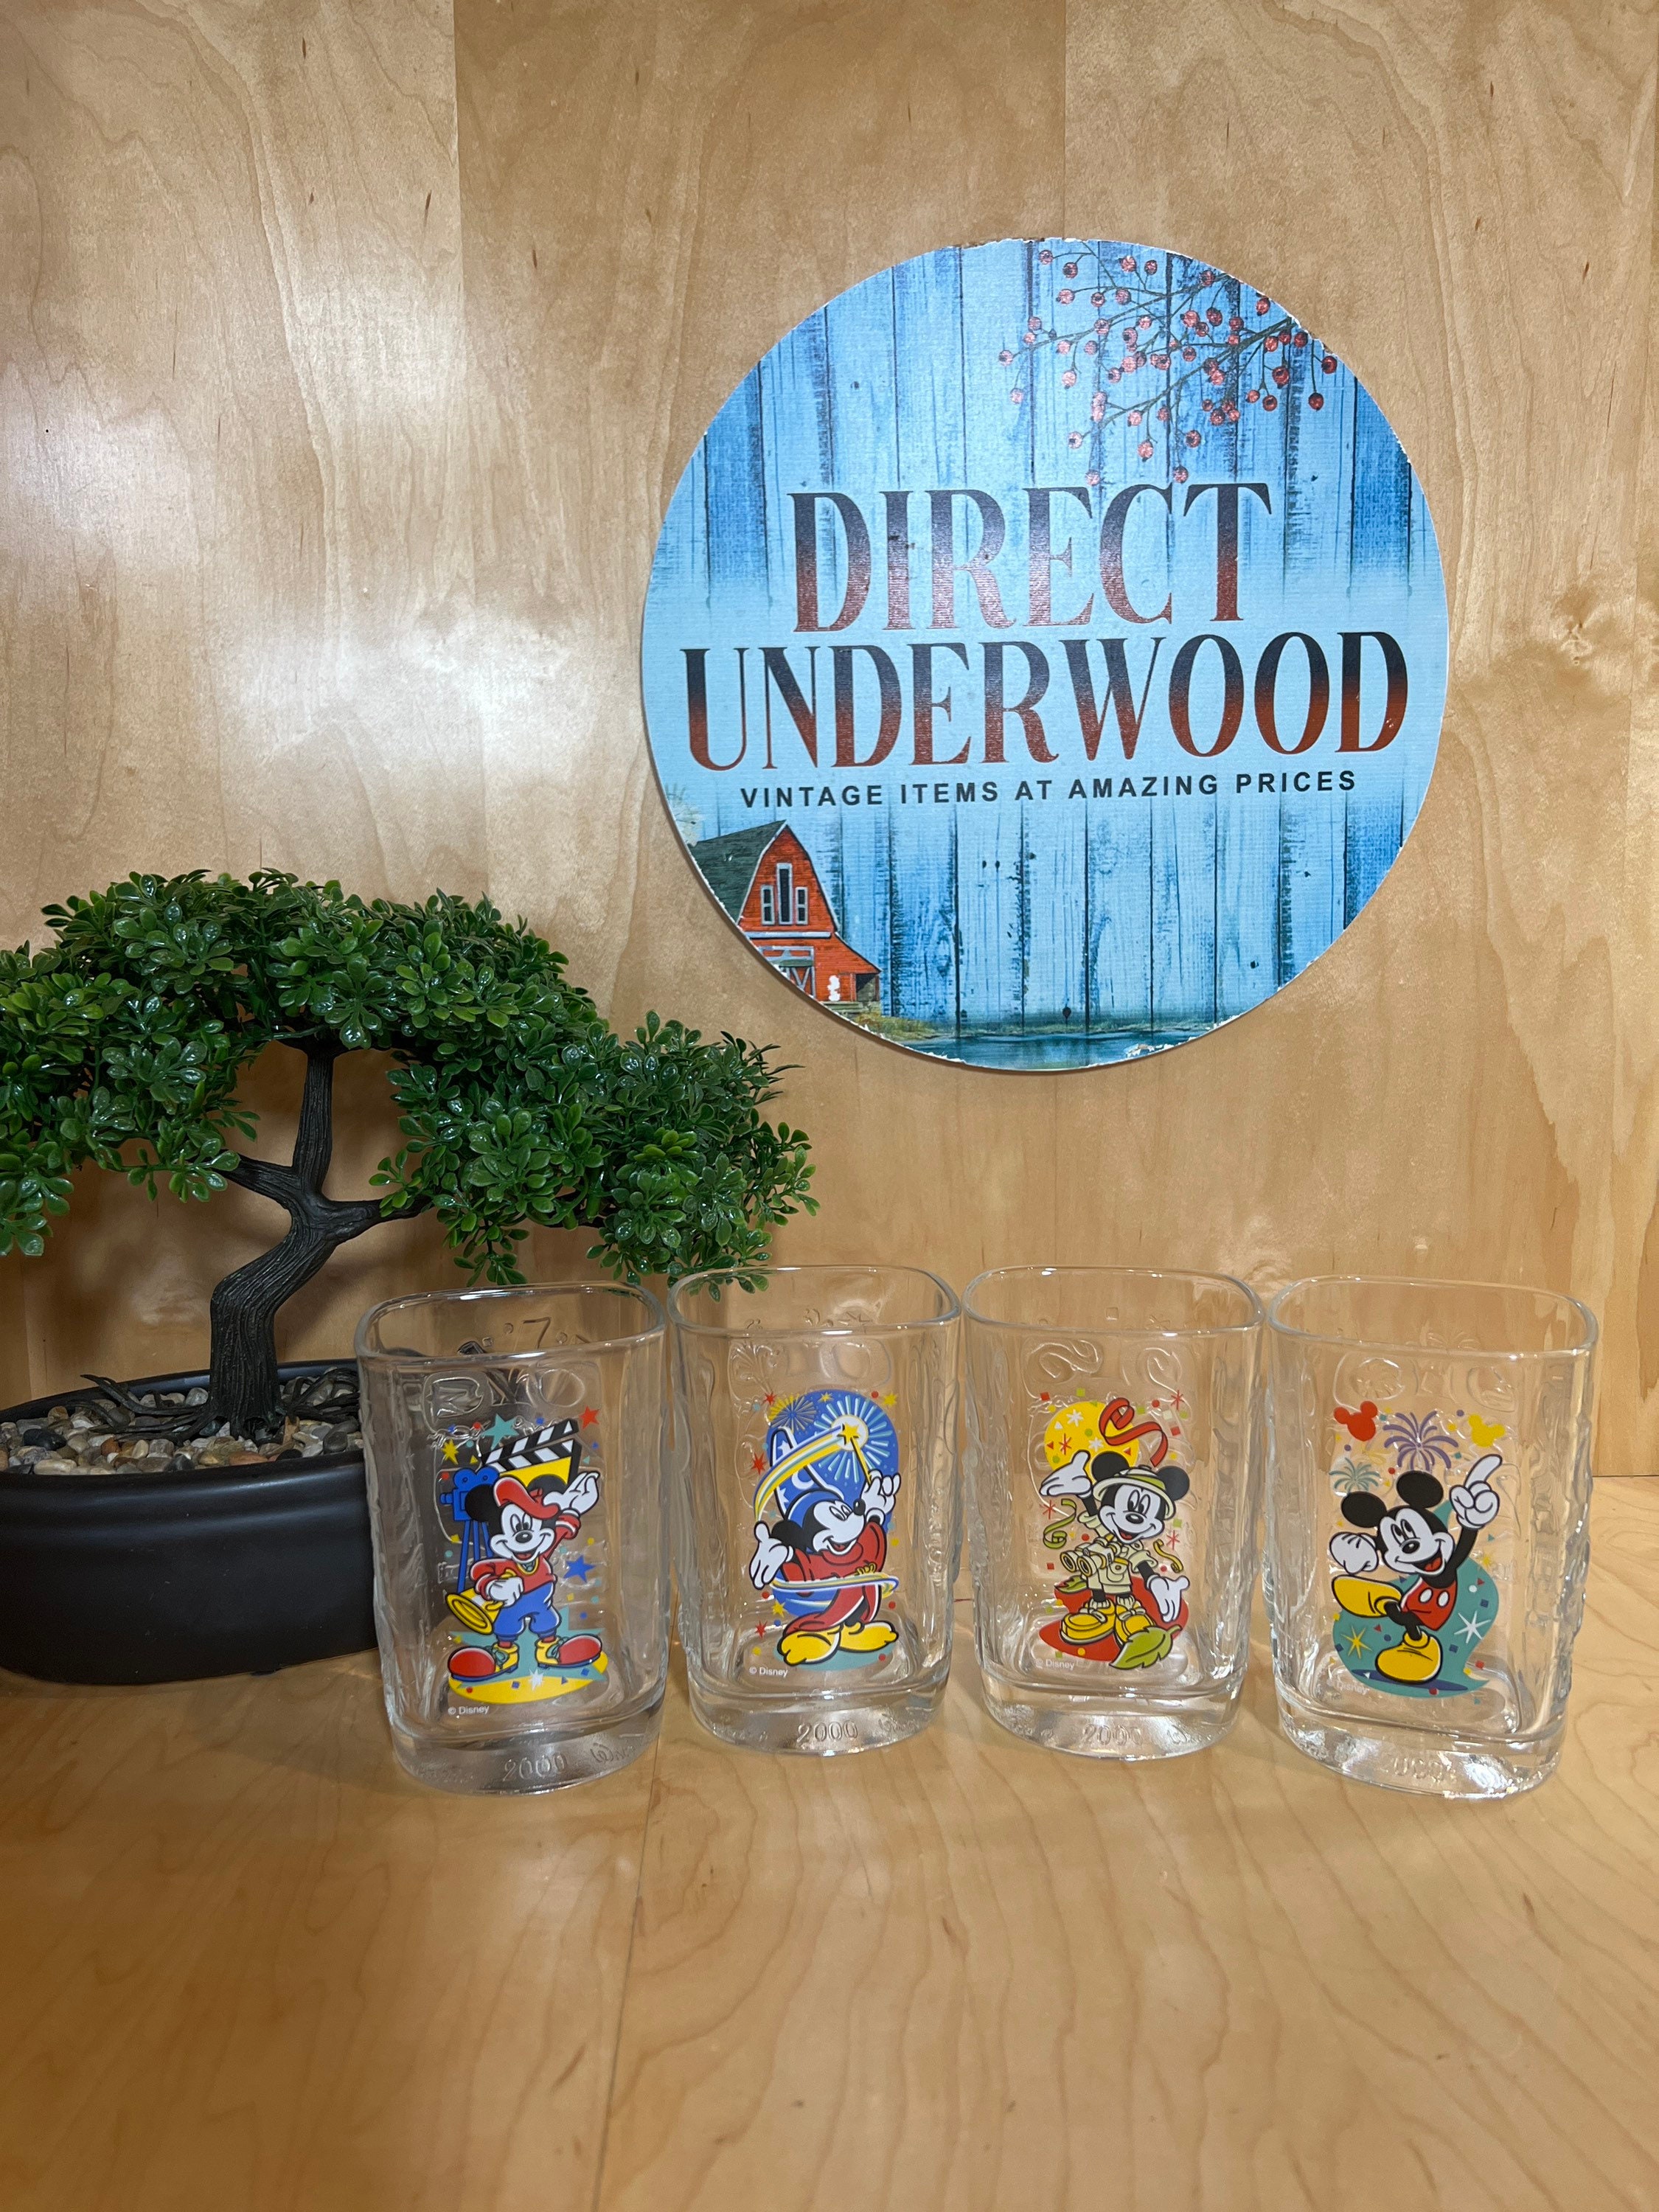 Disney World Mickey Mouse 2000 Complete Set Millennium Series Glasses (item  #1401783)